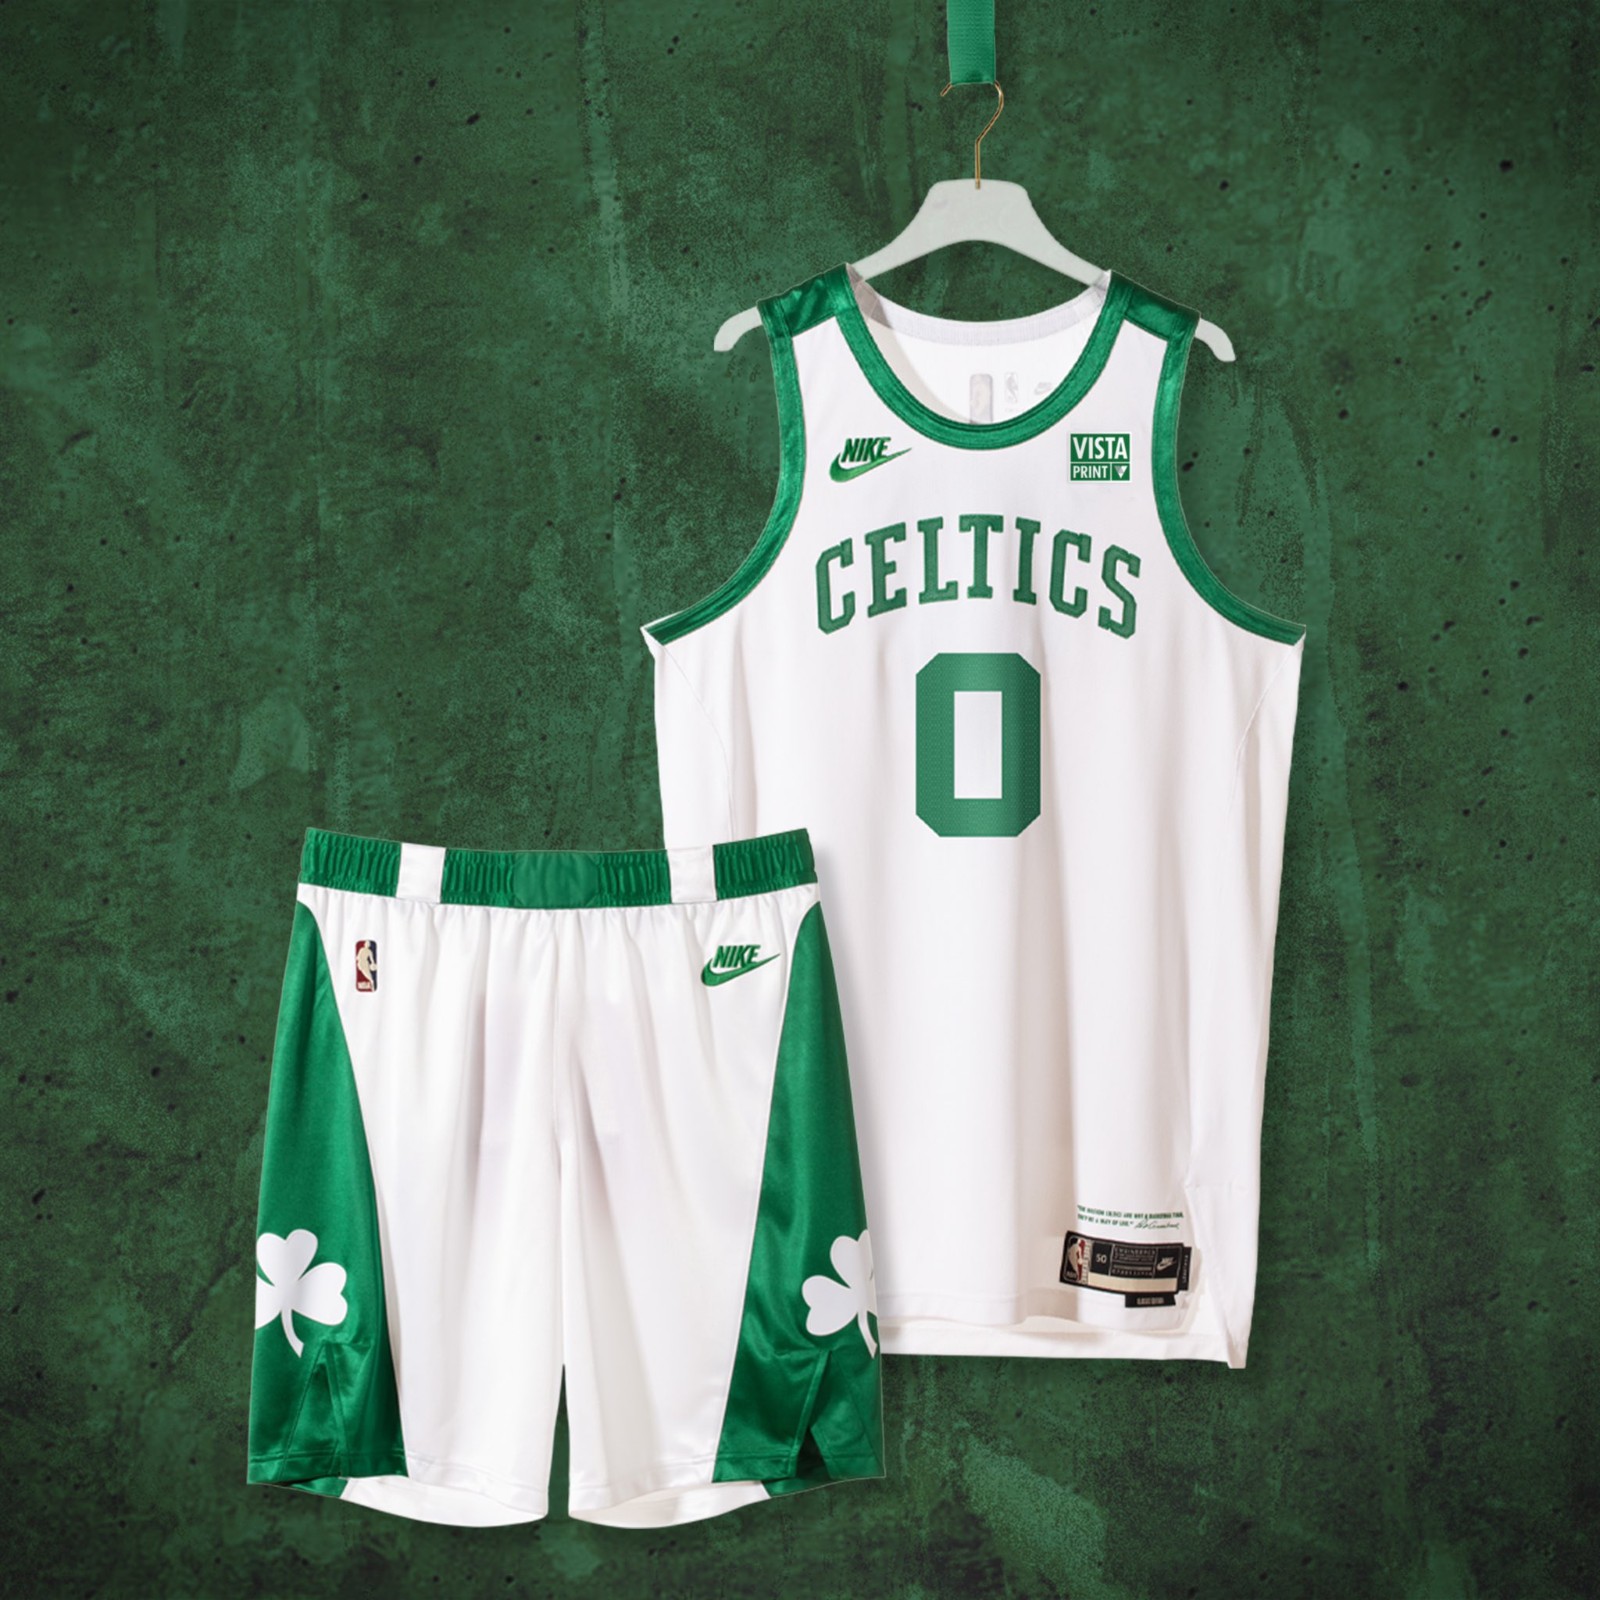 NLSC Forum • Vistaprint Celtics jersey?